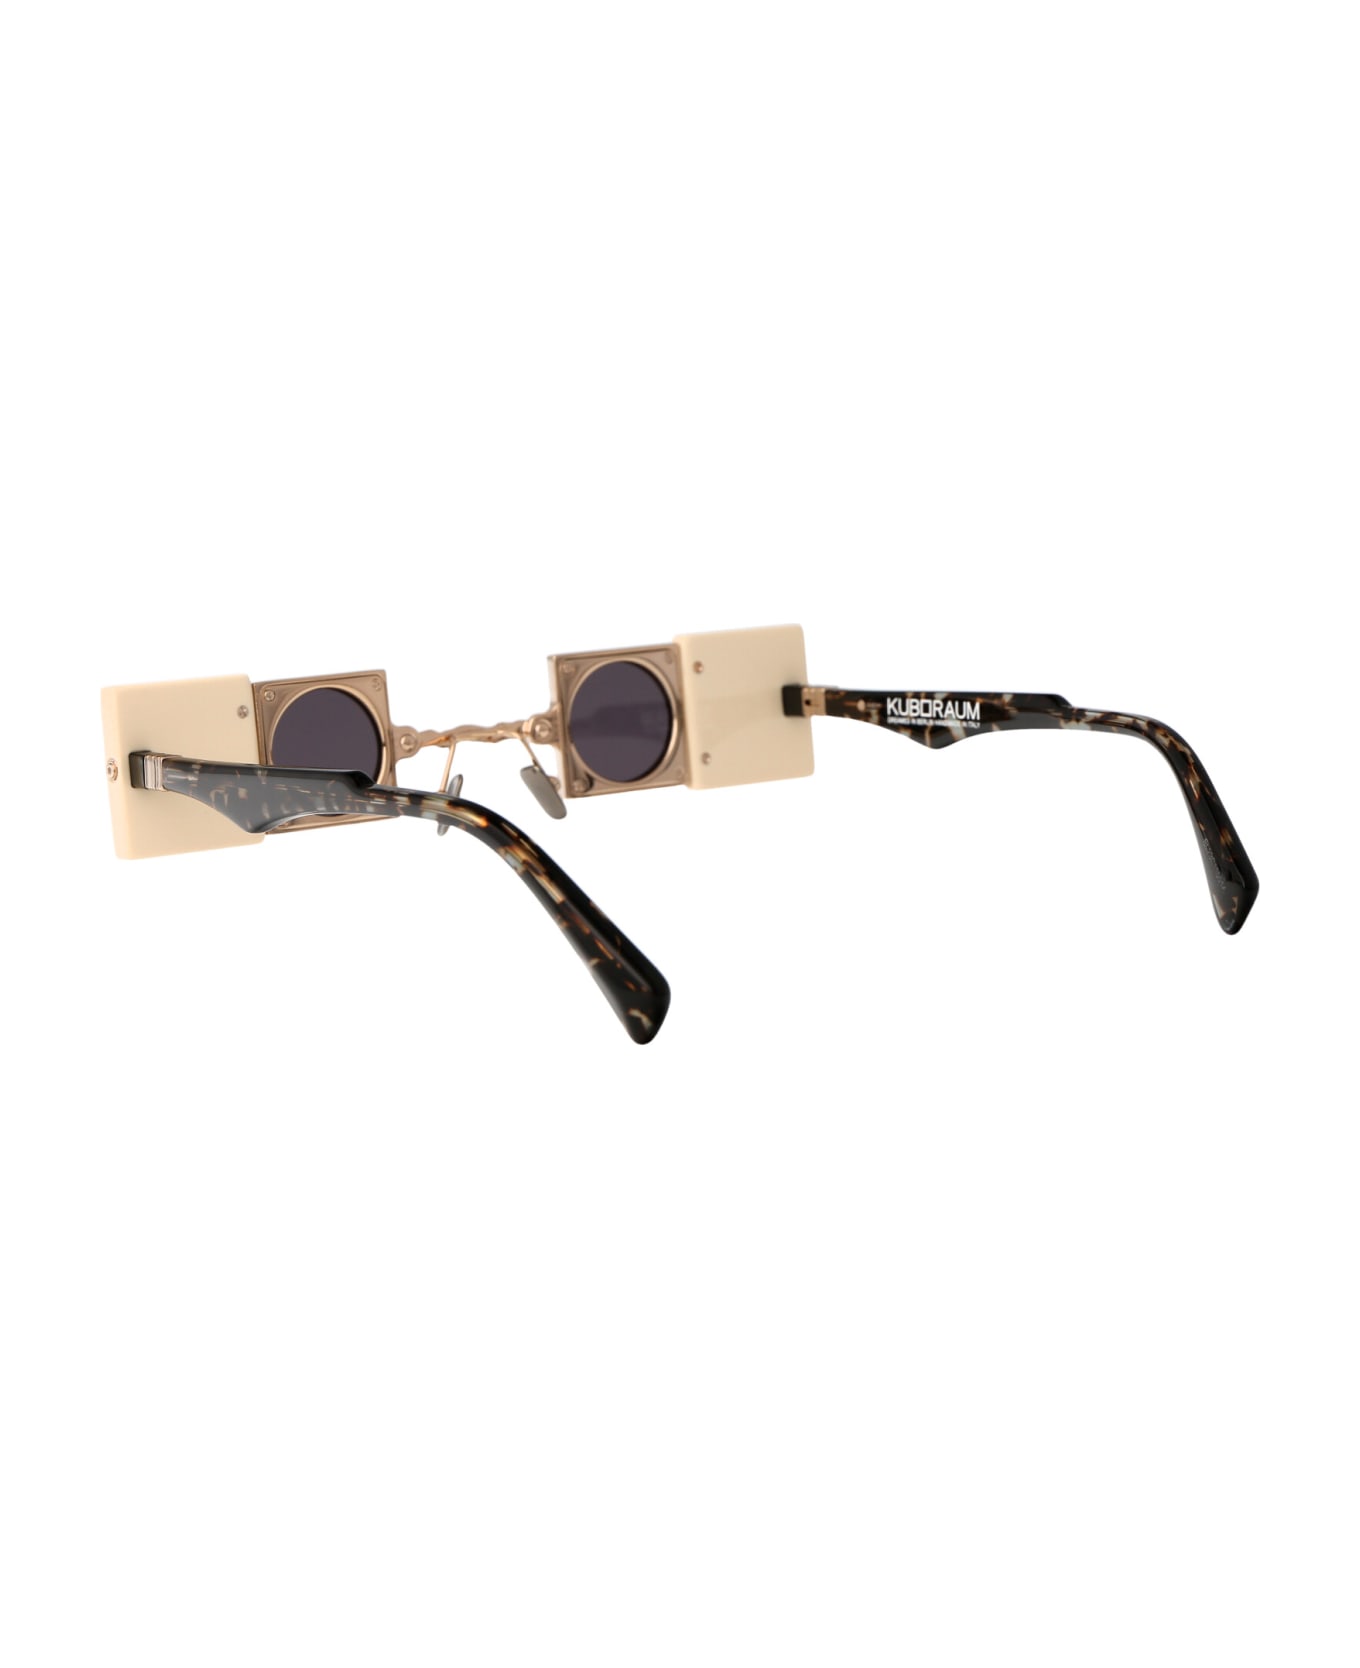 Kuboraum Maske Q50 Sunglasses - PG IY 2GREY サングラス